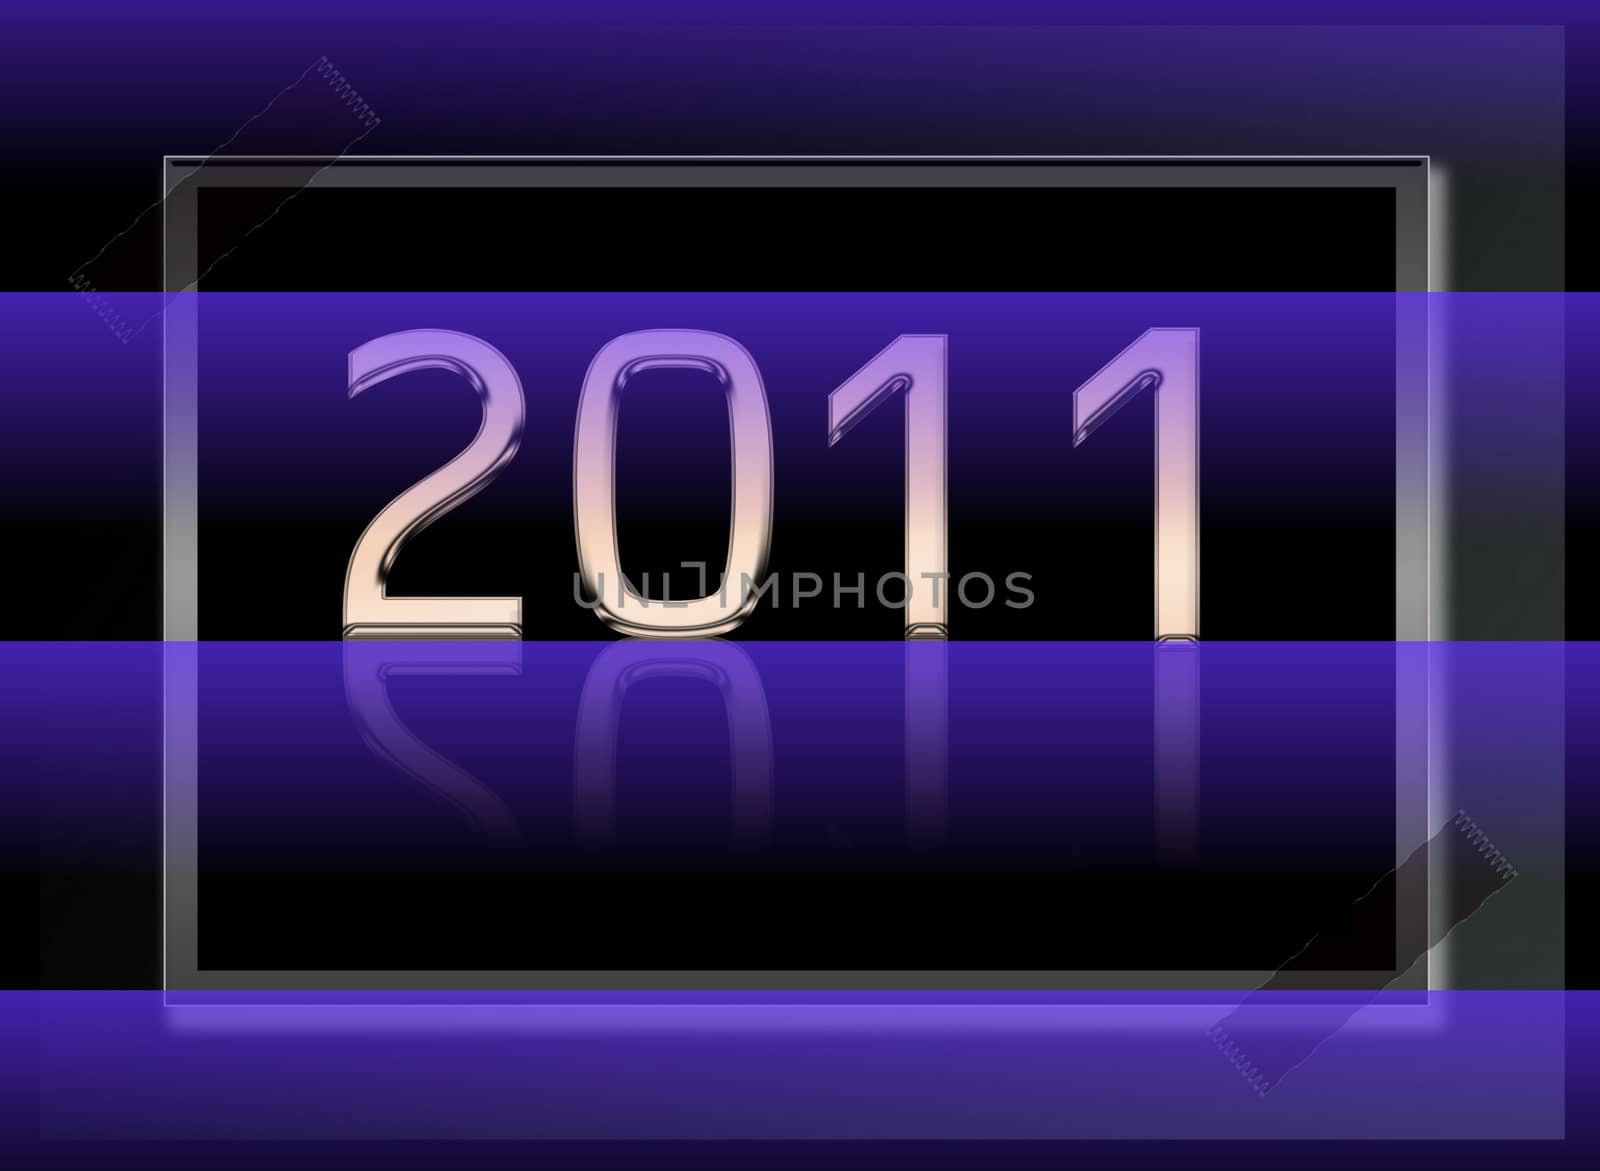 Card a congratulation happy New Year 2011. A deep dark blue background with a frame